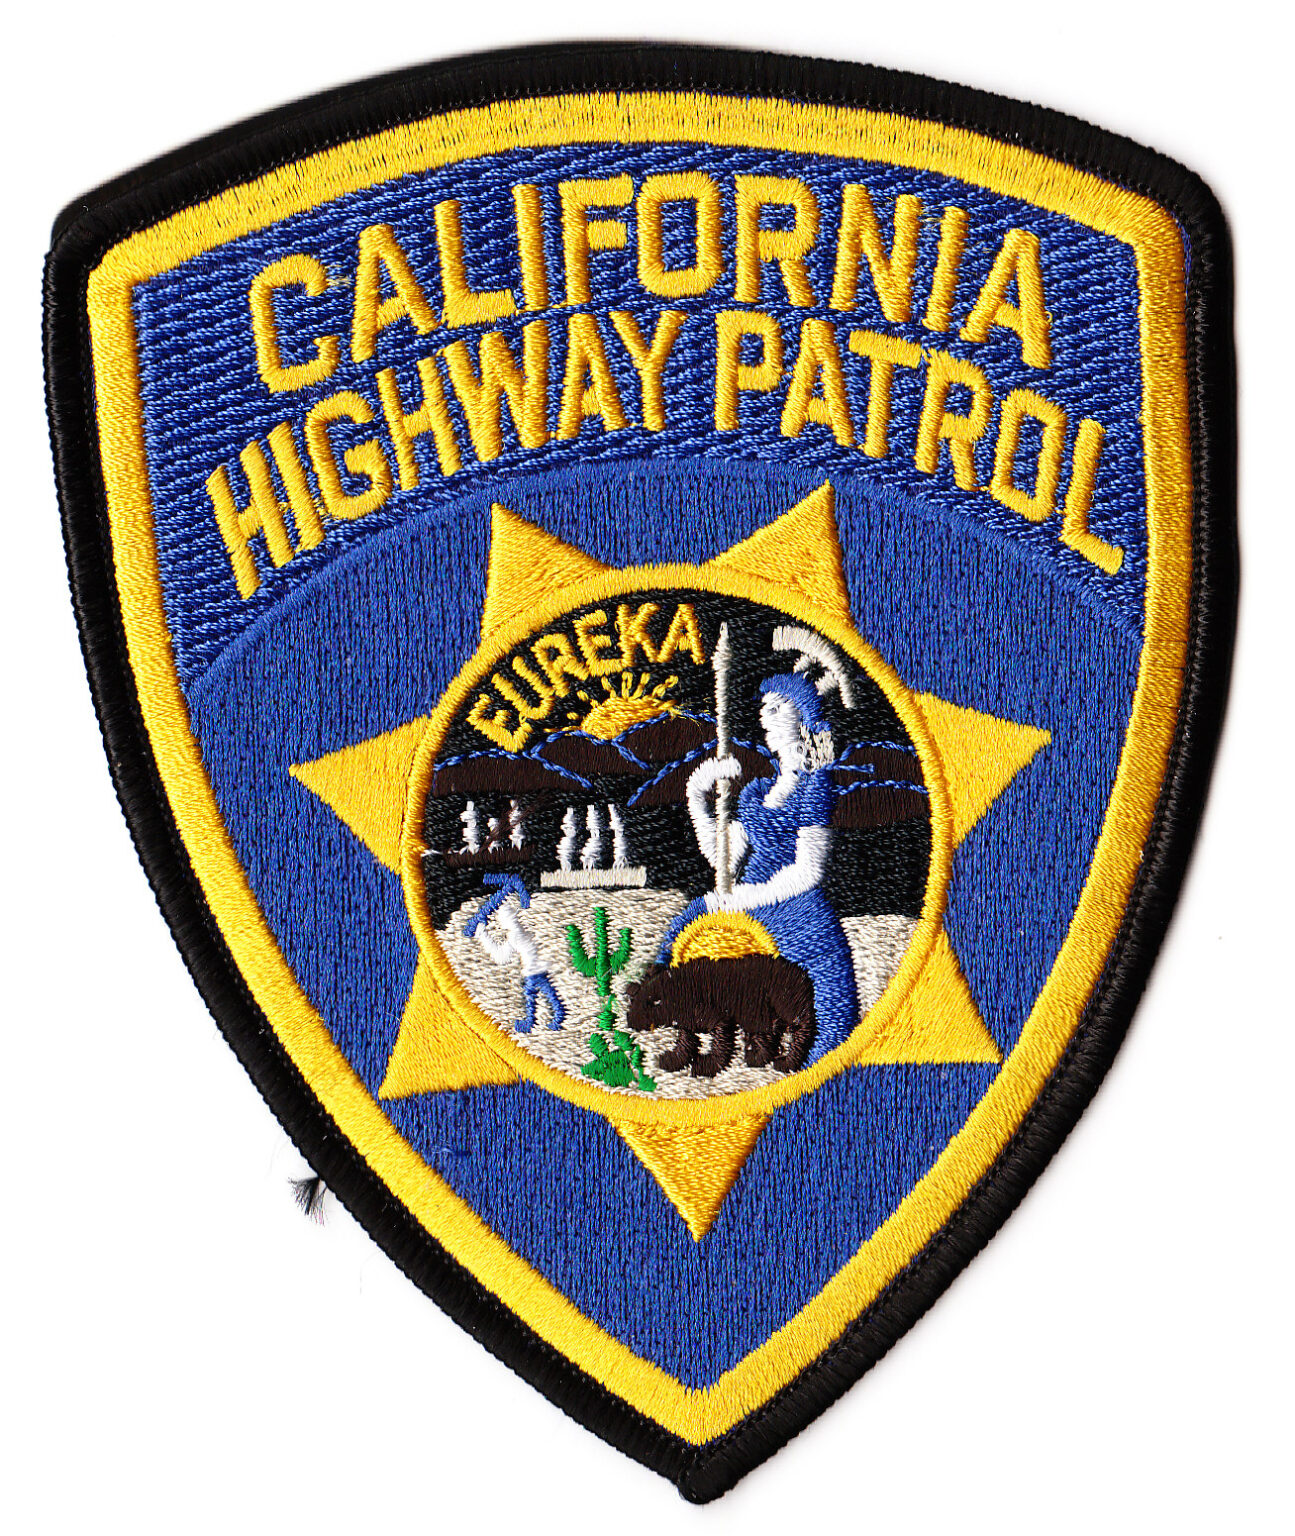 california highway patrol shoulder patch